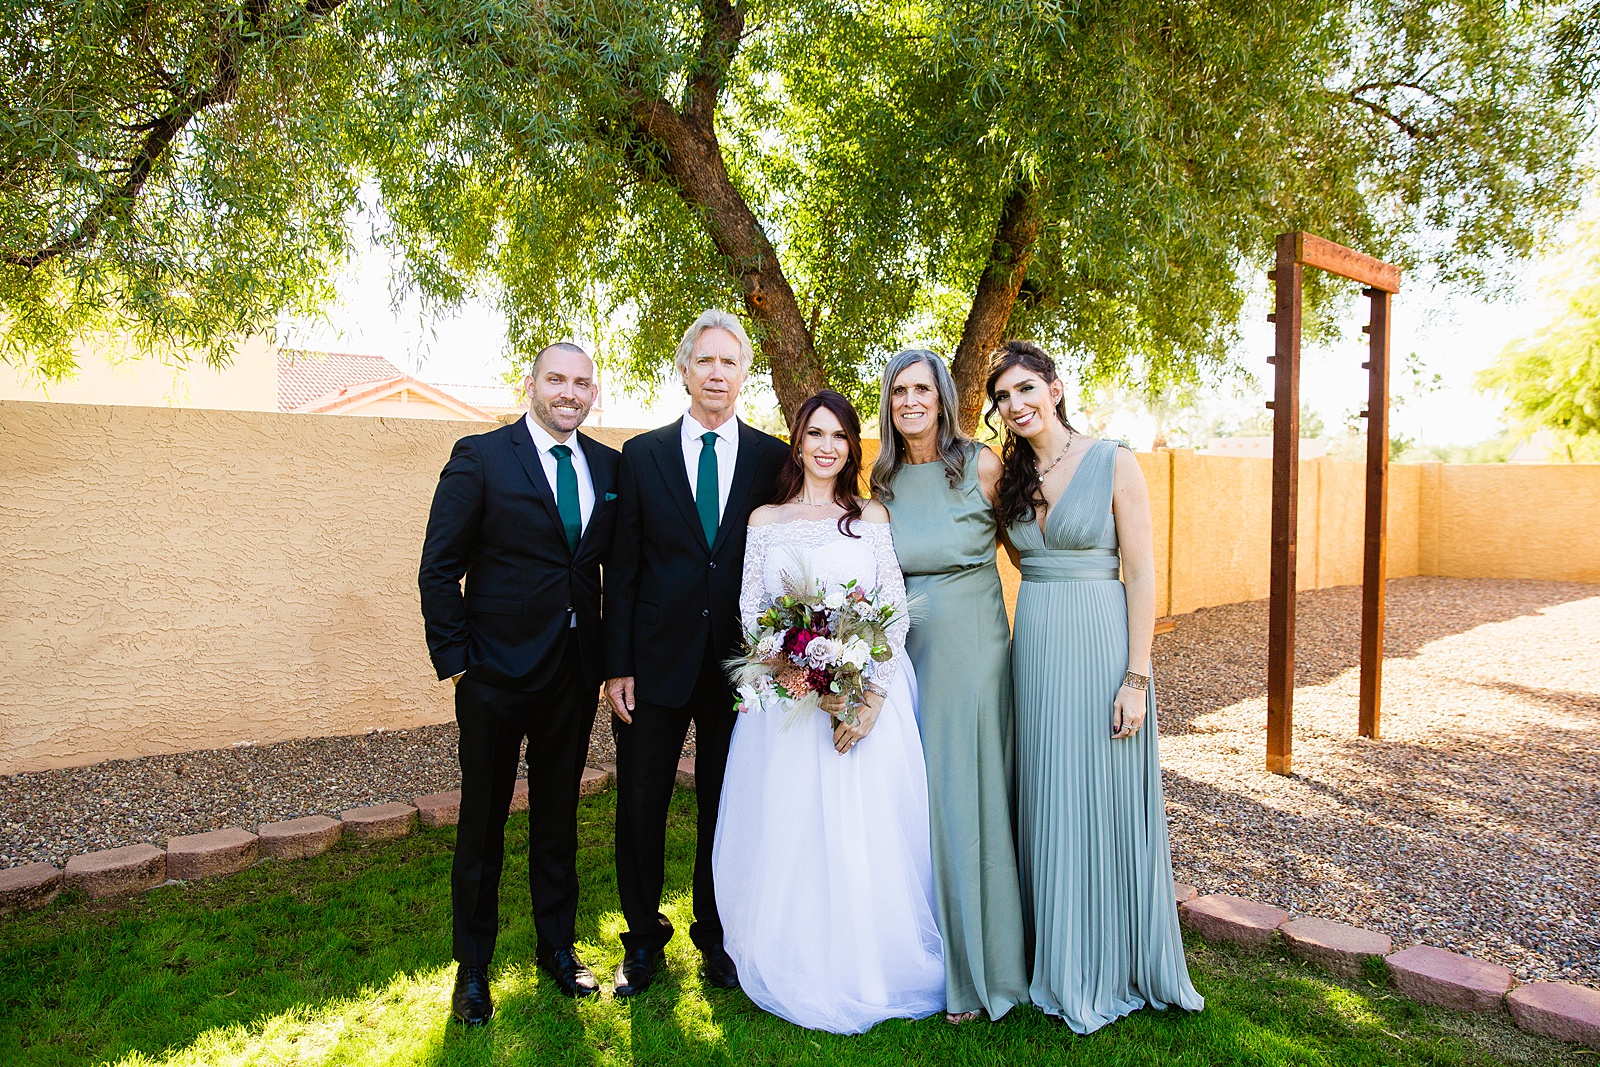 Bride with her family at a Backyard Micro wedding by Arizona wedding photographer PMA Photography.